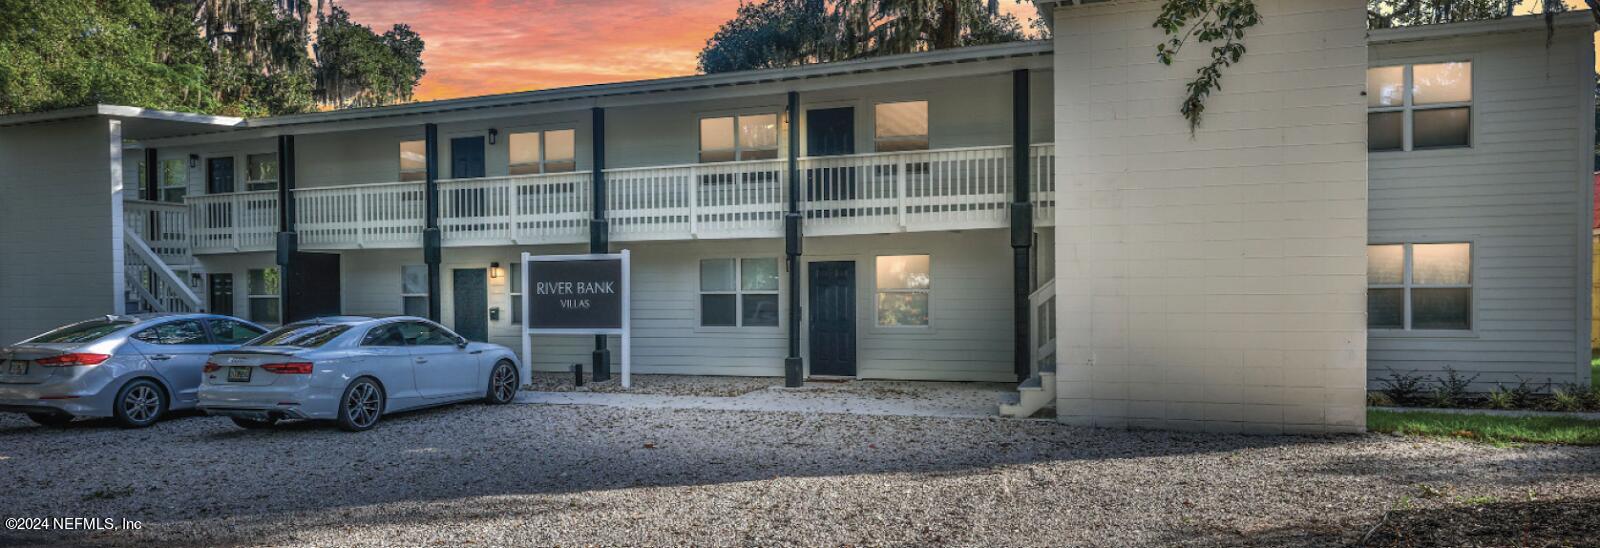 Jacksonville, FL home for sale located at 1201 River Bank Court, Jacksonville, FL 32207